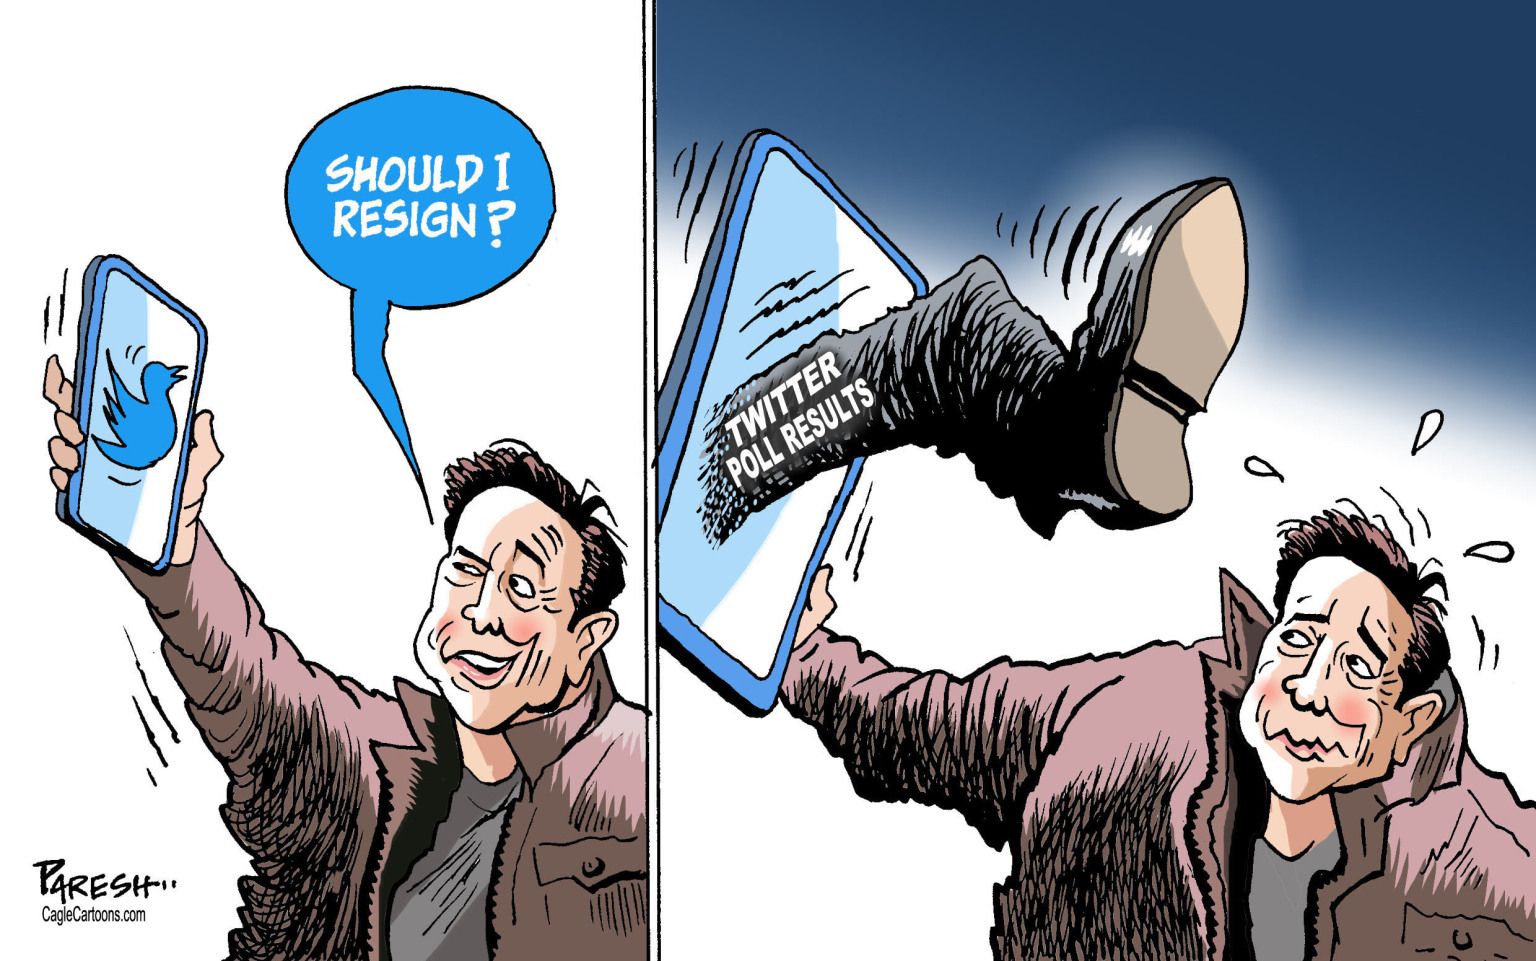 Twitter on Elon Musk - newsjustin.press editorial political cartoon